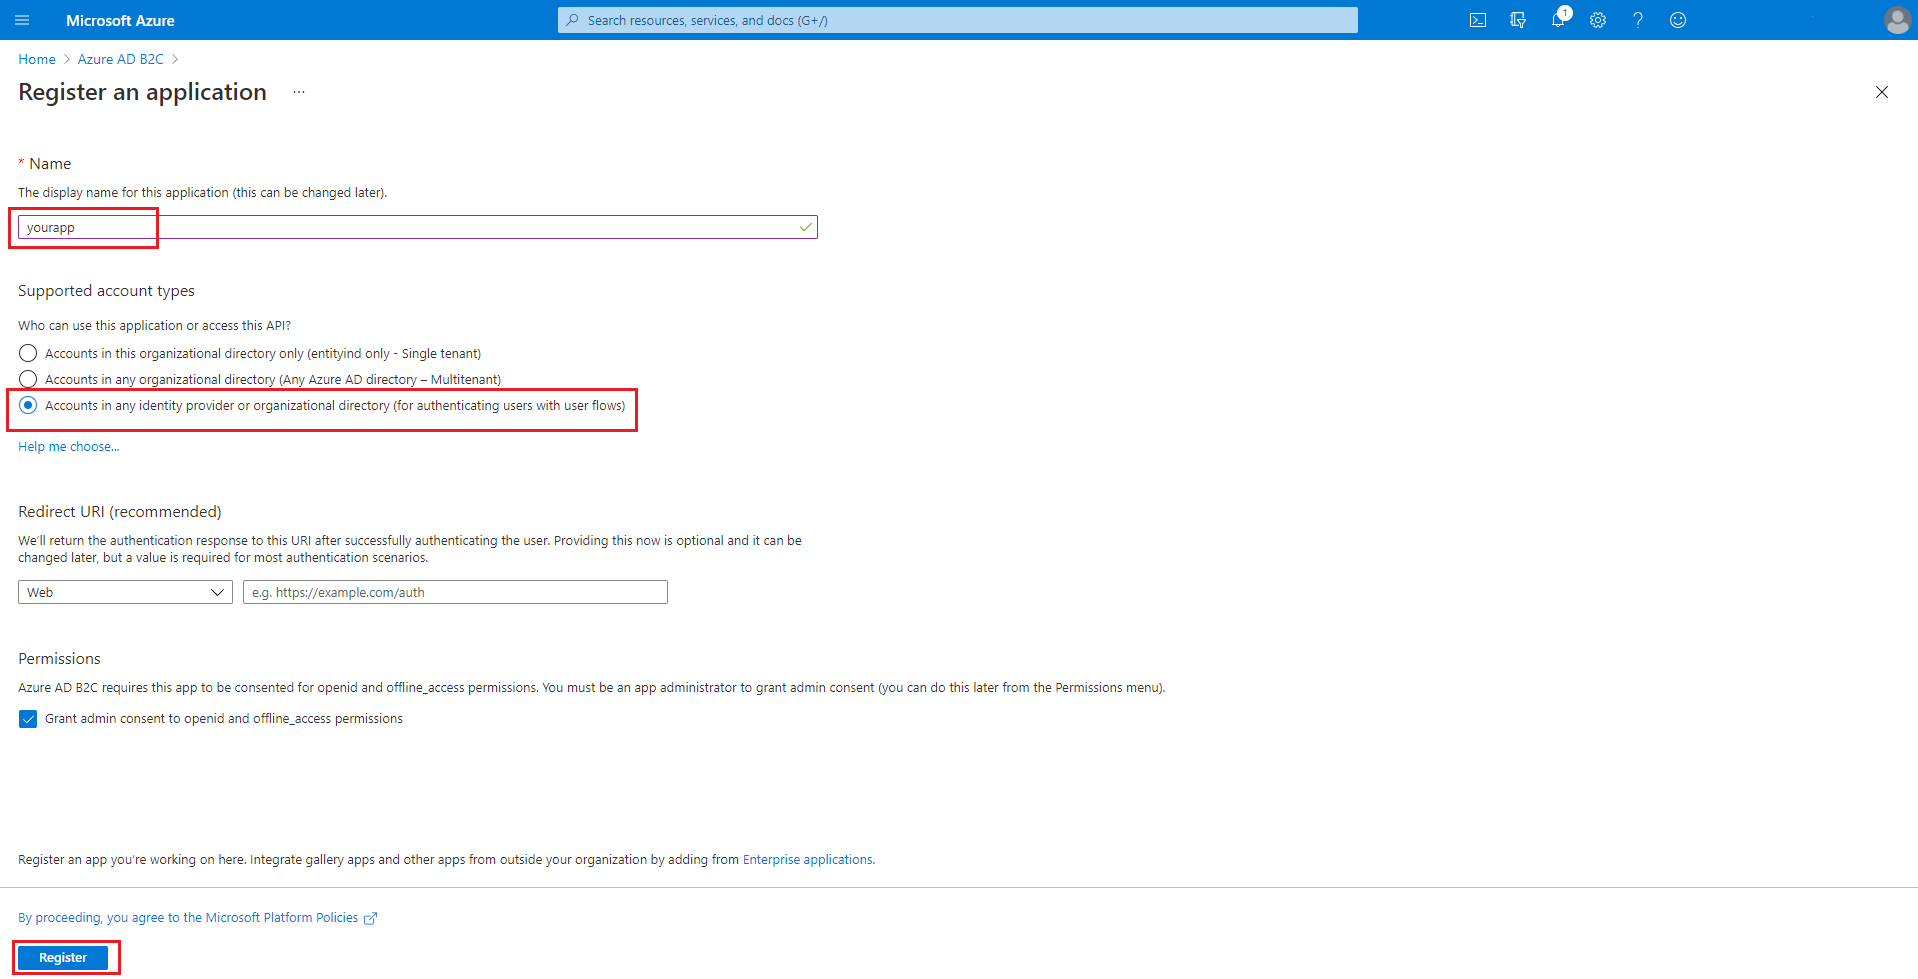 Azure AD B2C register an application form.